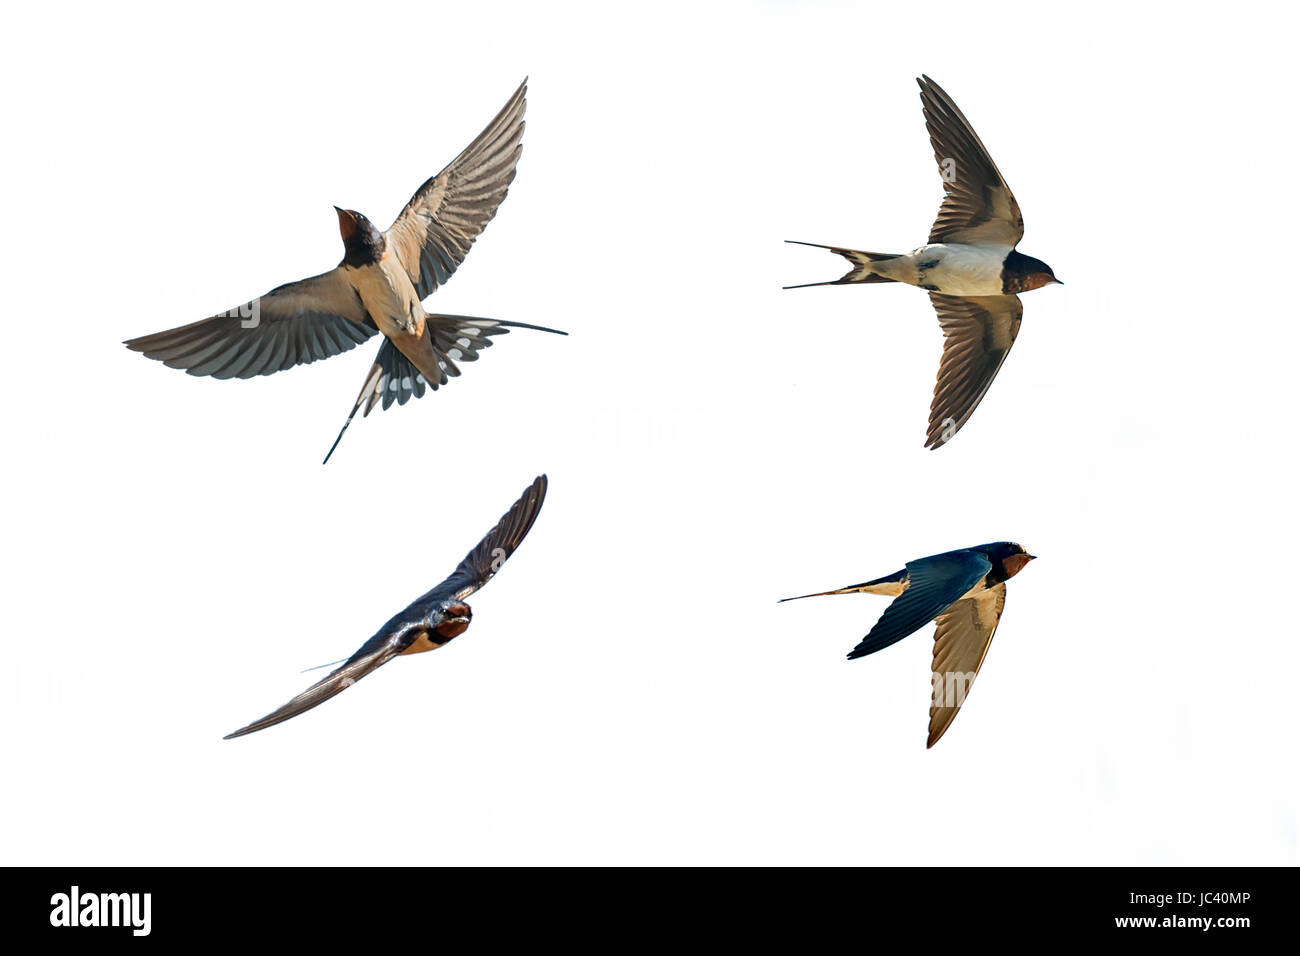 various postures of swallow hirundo rustica on white background Stock Photo